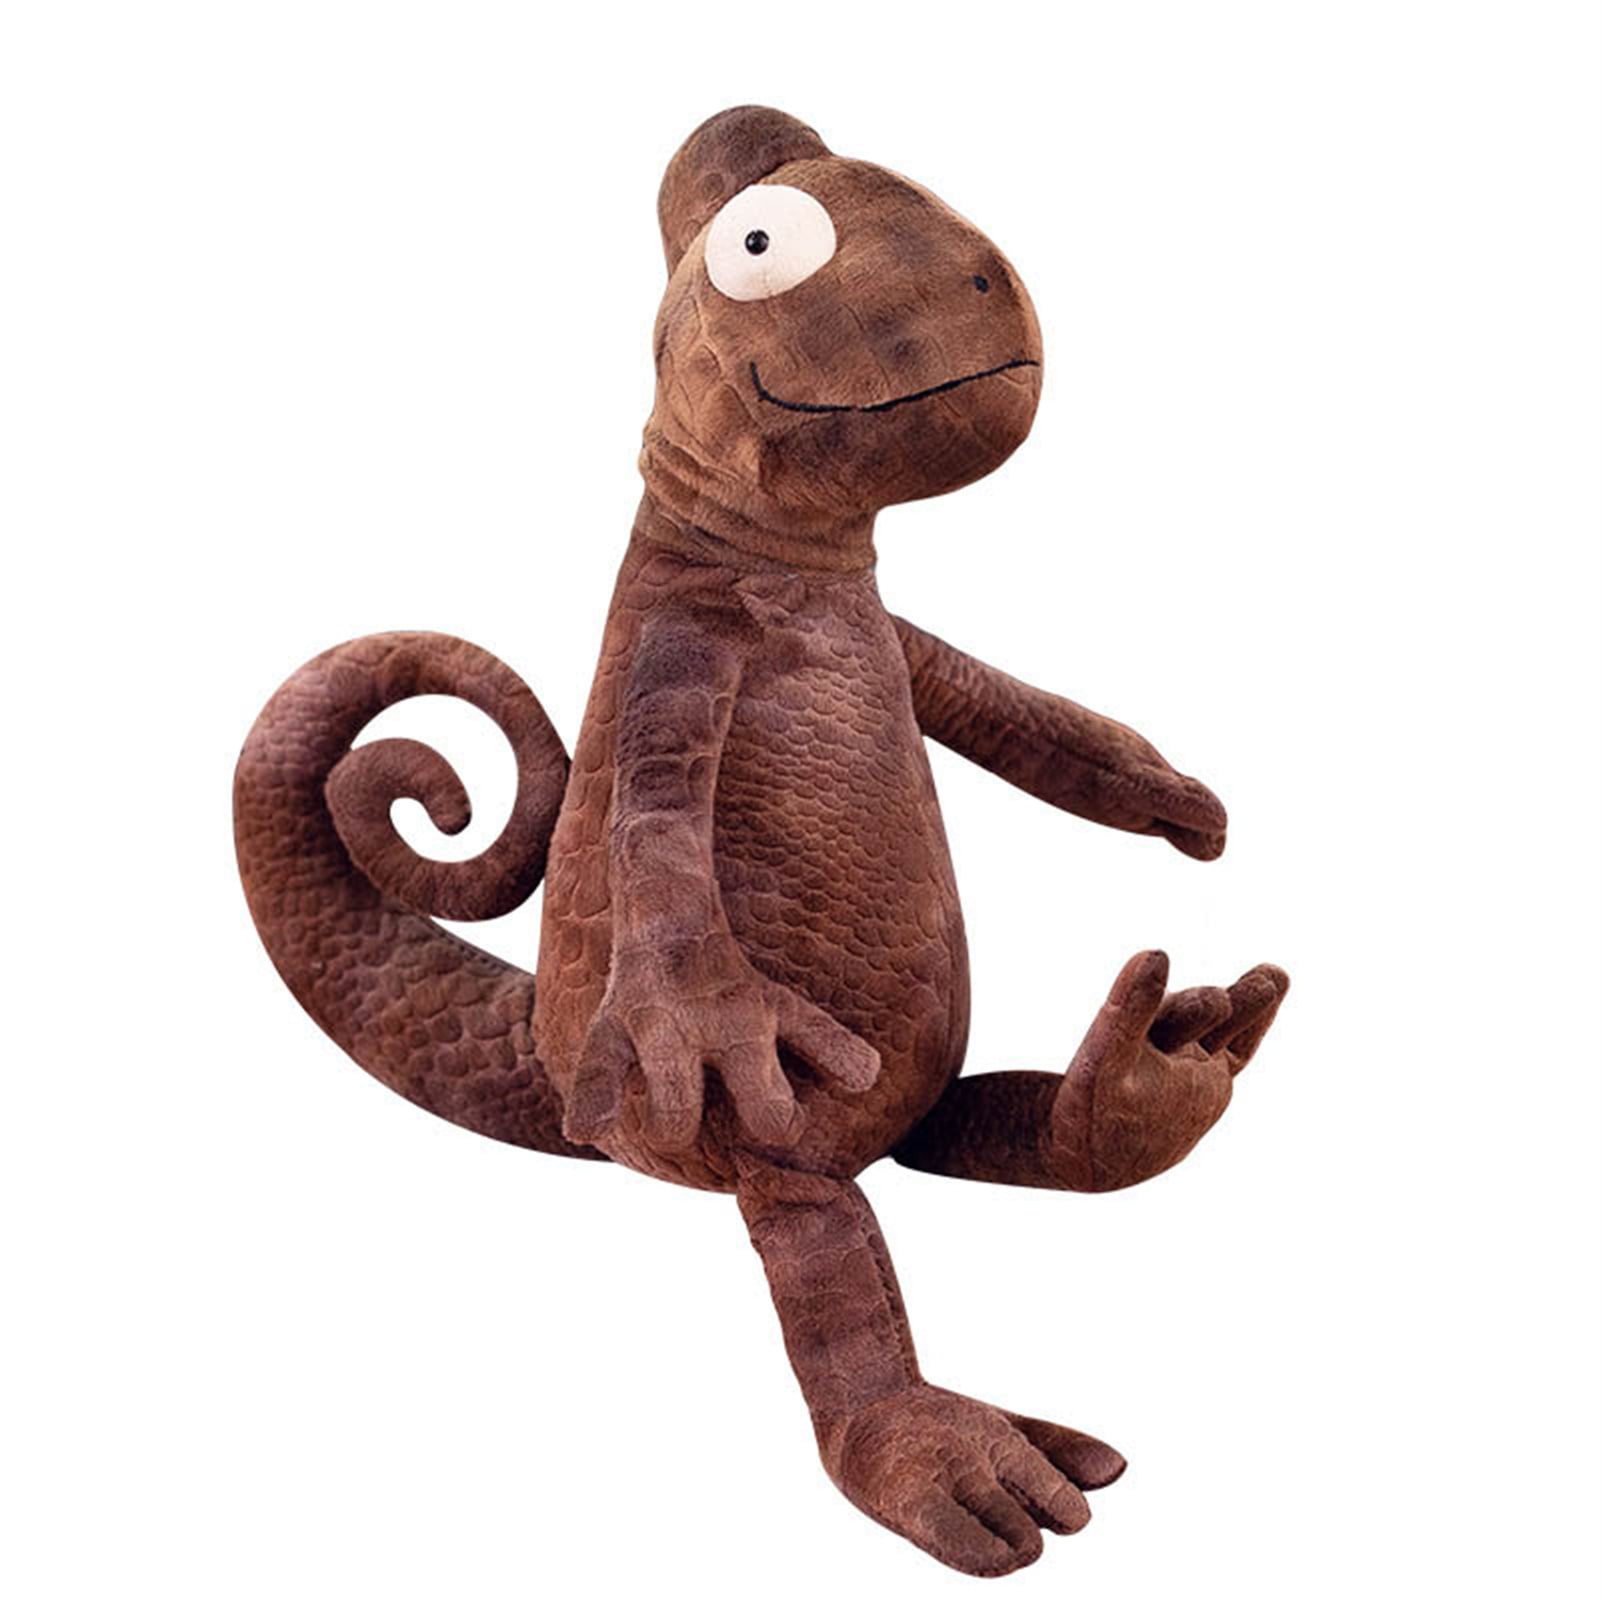 New Plush Lizard Toy Chameleon Doll Soft Stuffed Animal Adult Kids Birthday Gift 